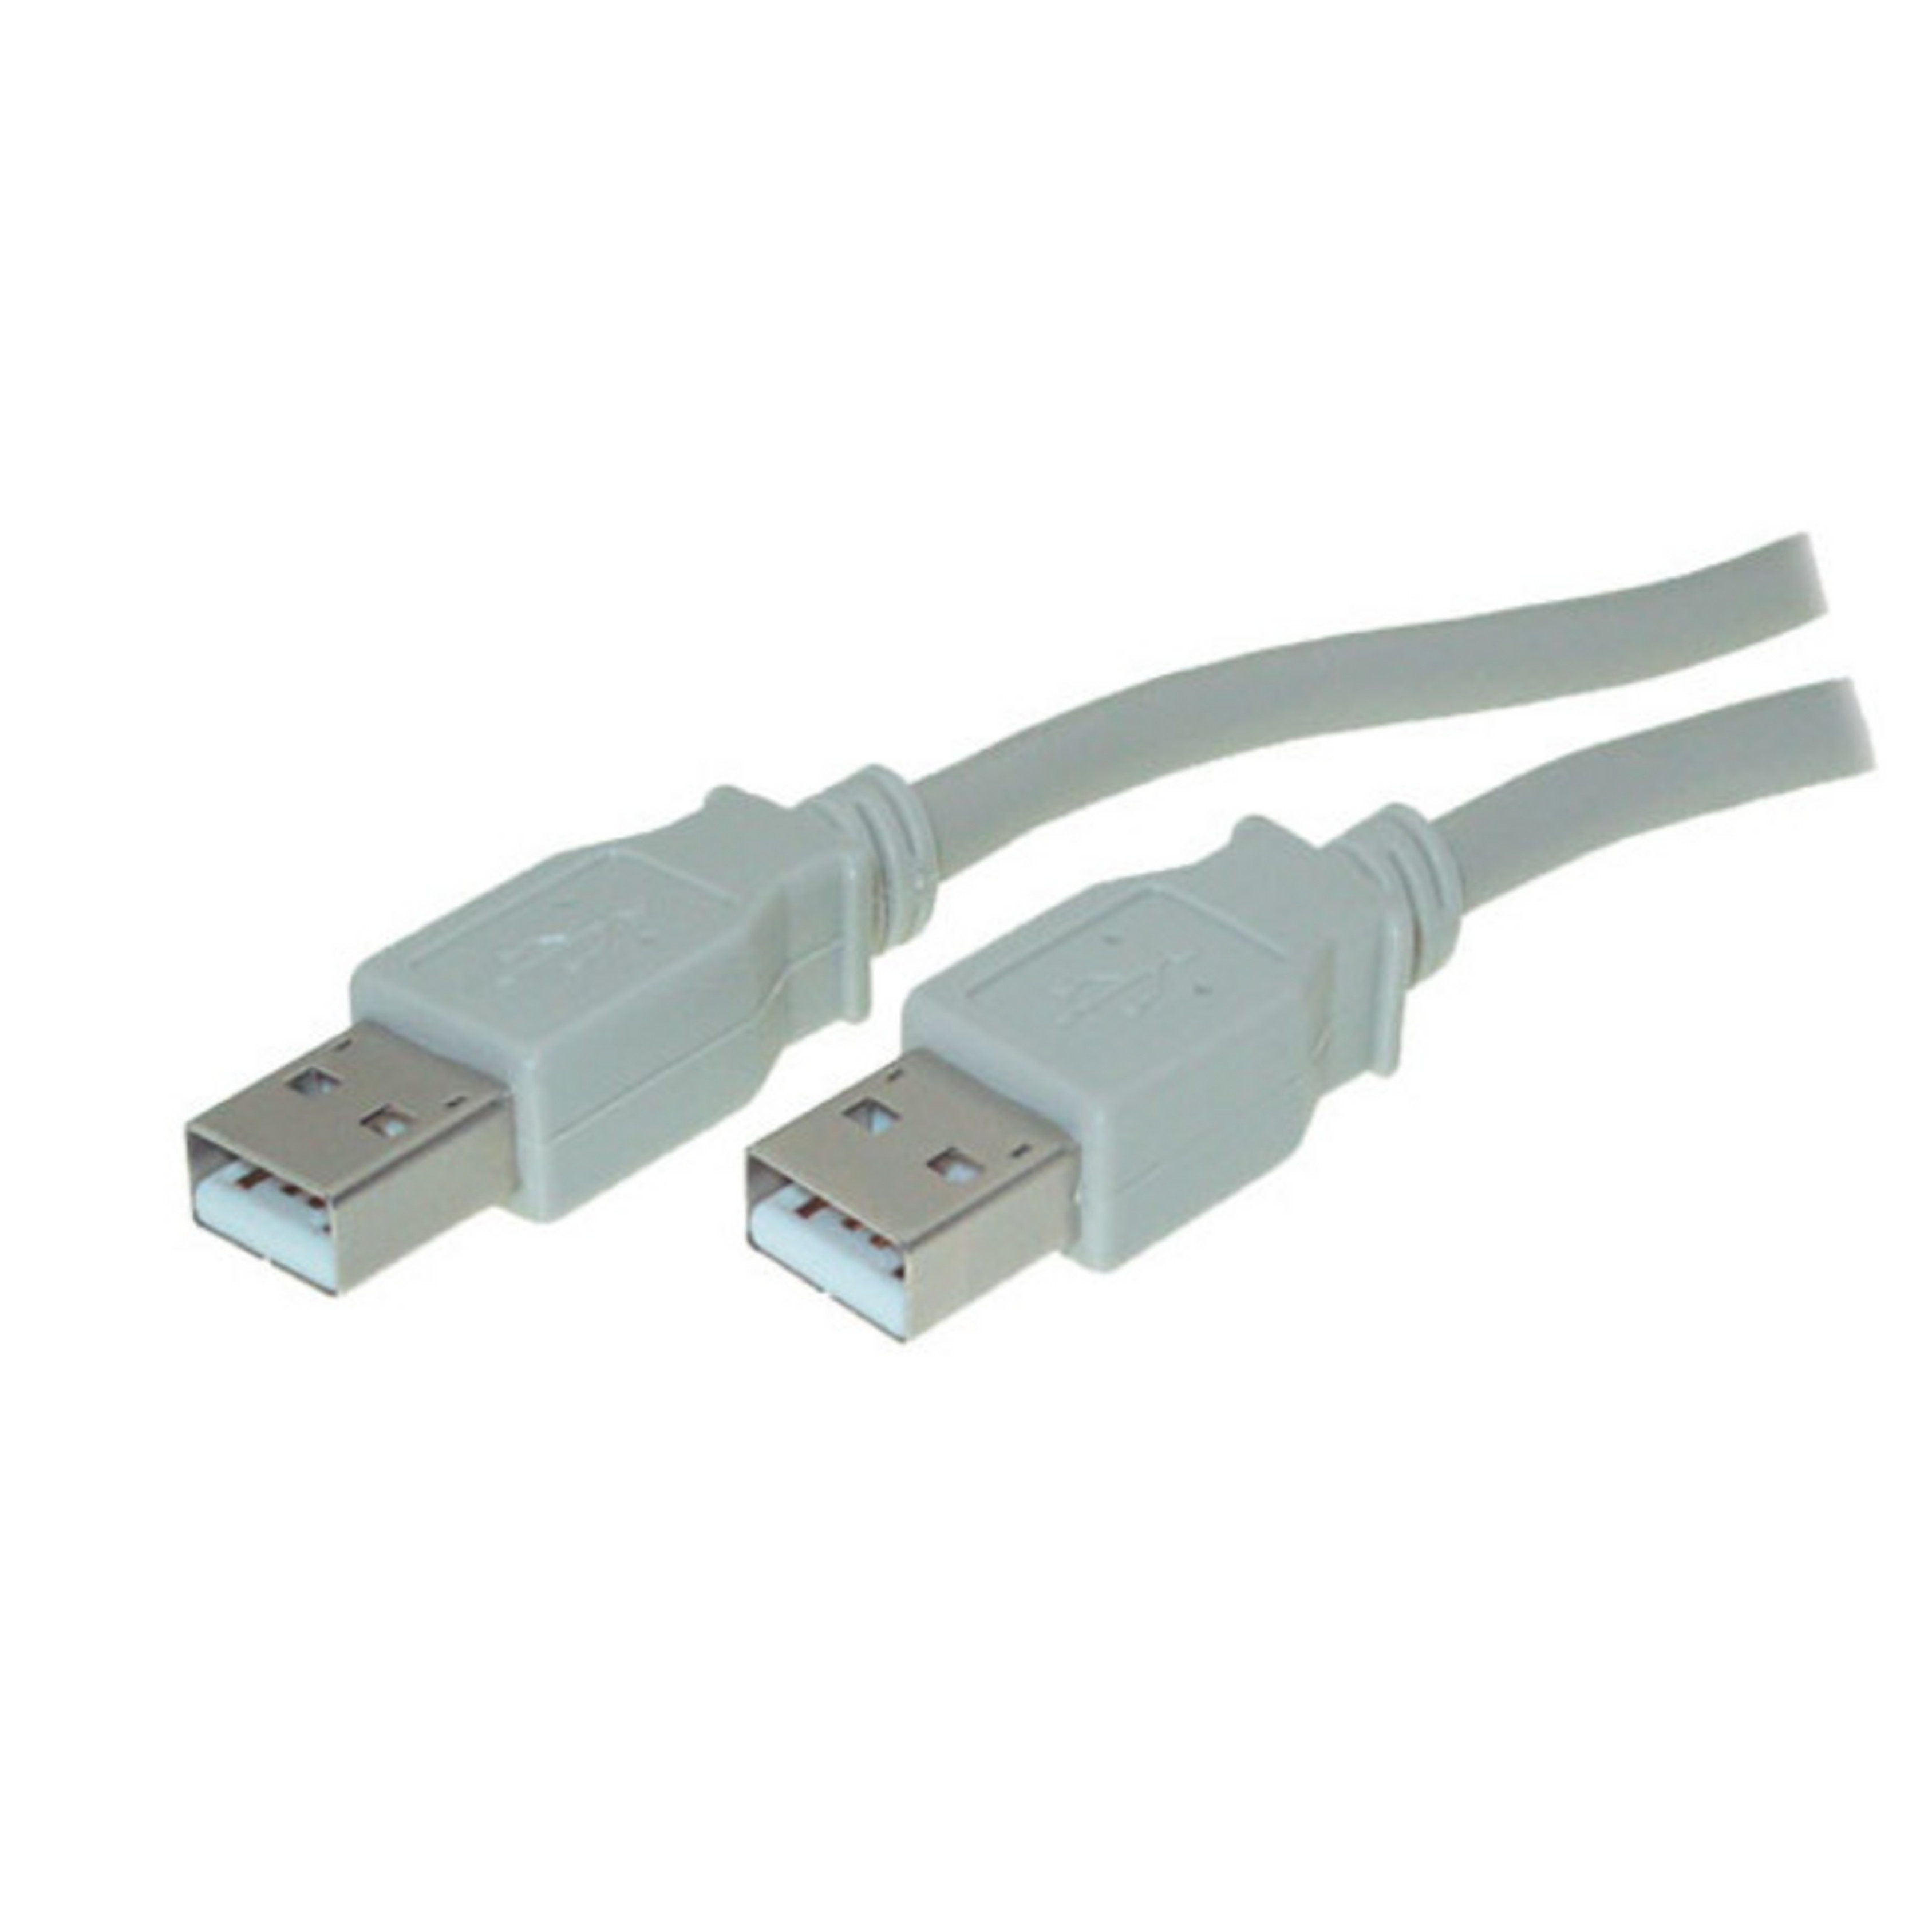 S/CONN MAXIMUM 2.0 USB Kabel A Kabel USB Stecker Stecker / 5m CONNECTIVITY A USB